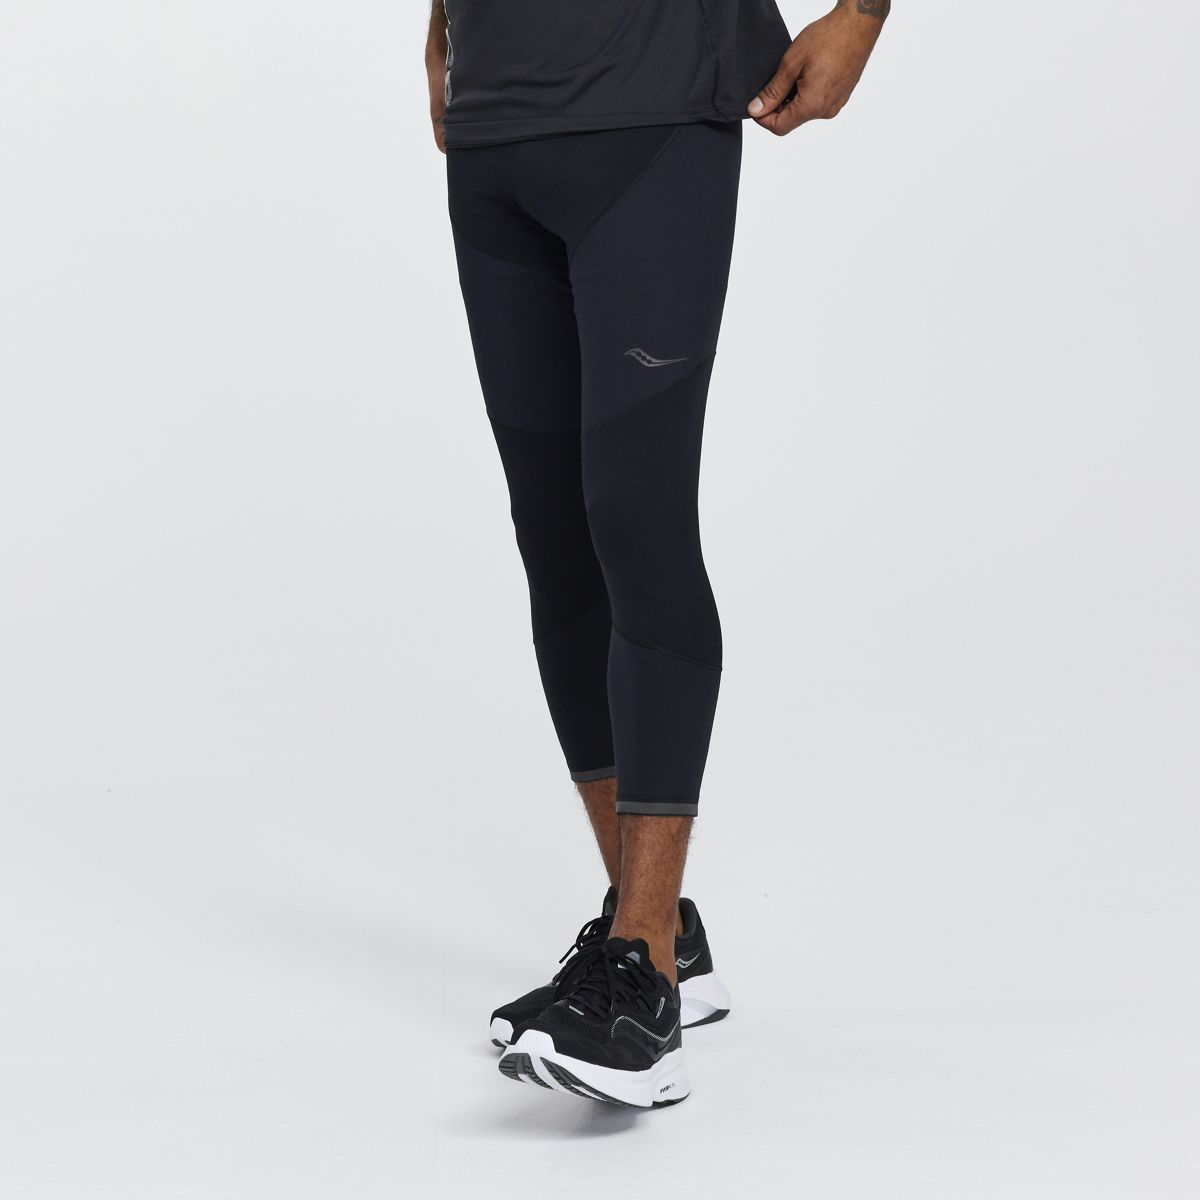 Balance Collection Mens Black Athletic Shorts Size Large - beyond